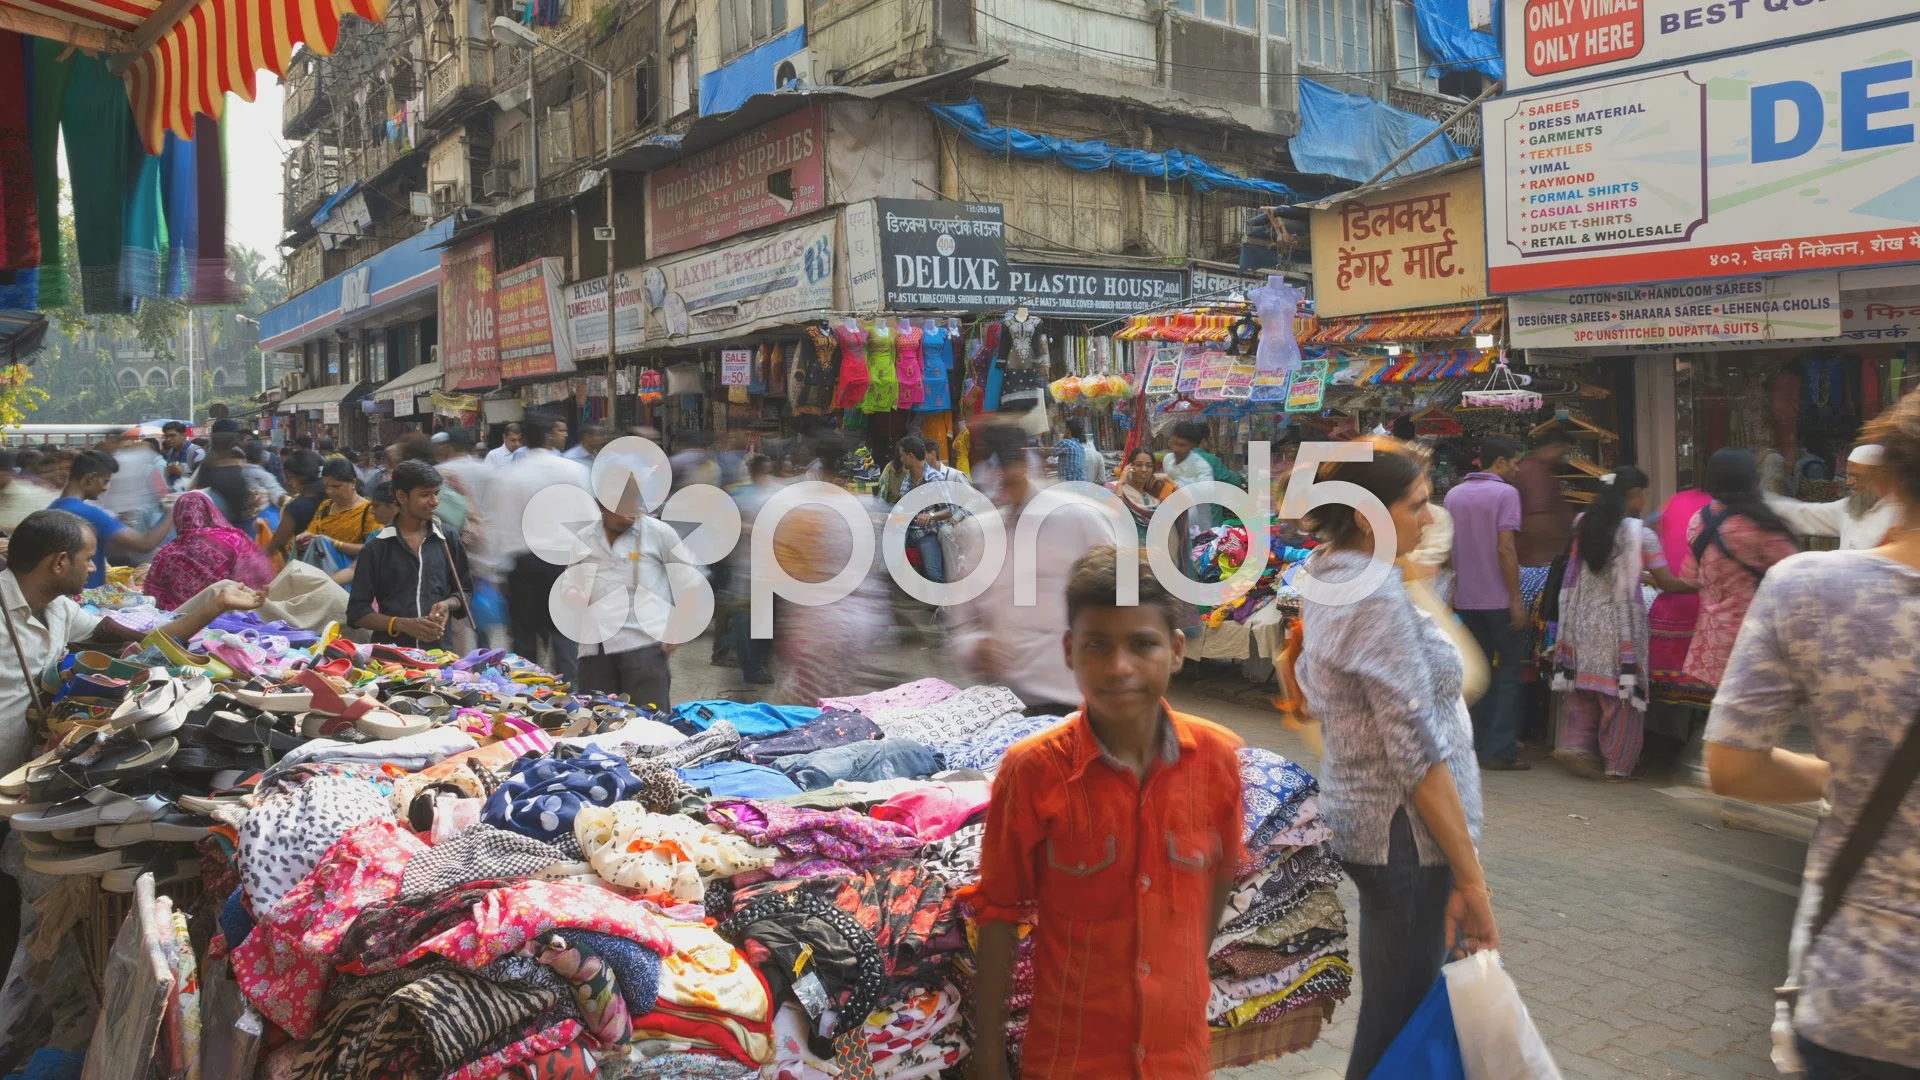 Crawford Market area, Mumbai, India – License image – 71345005 ❘ lookphotos